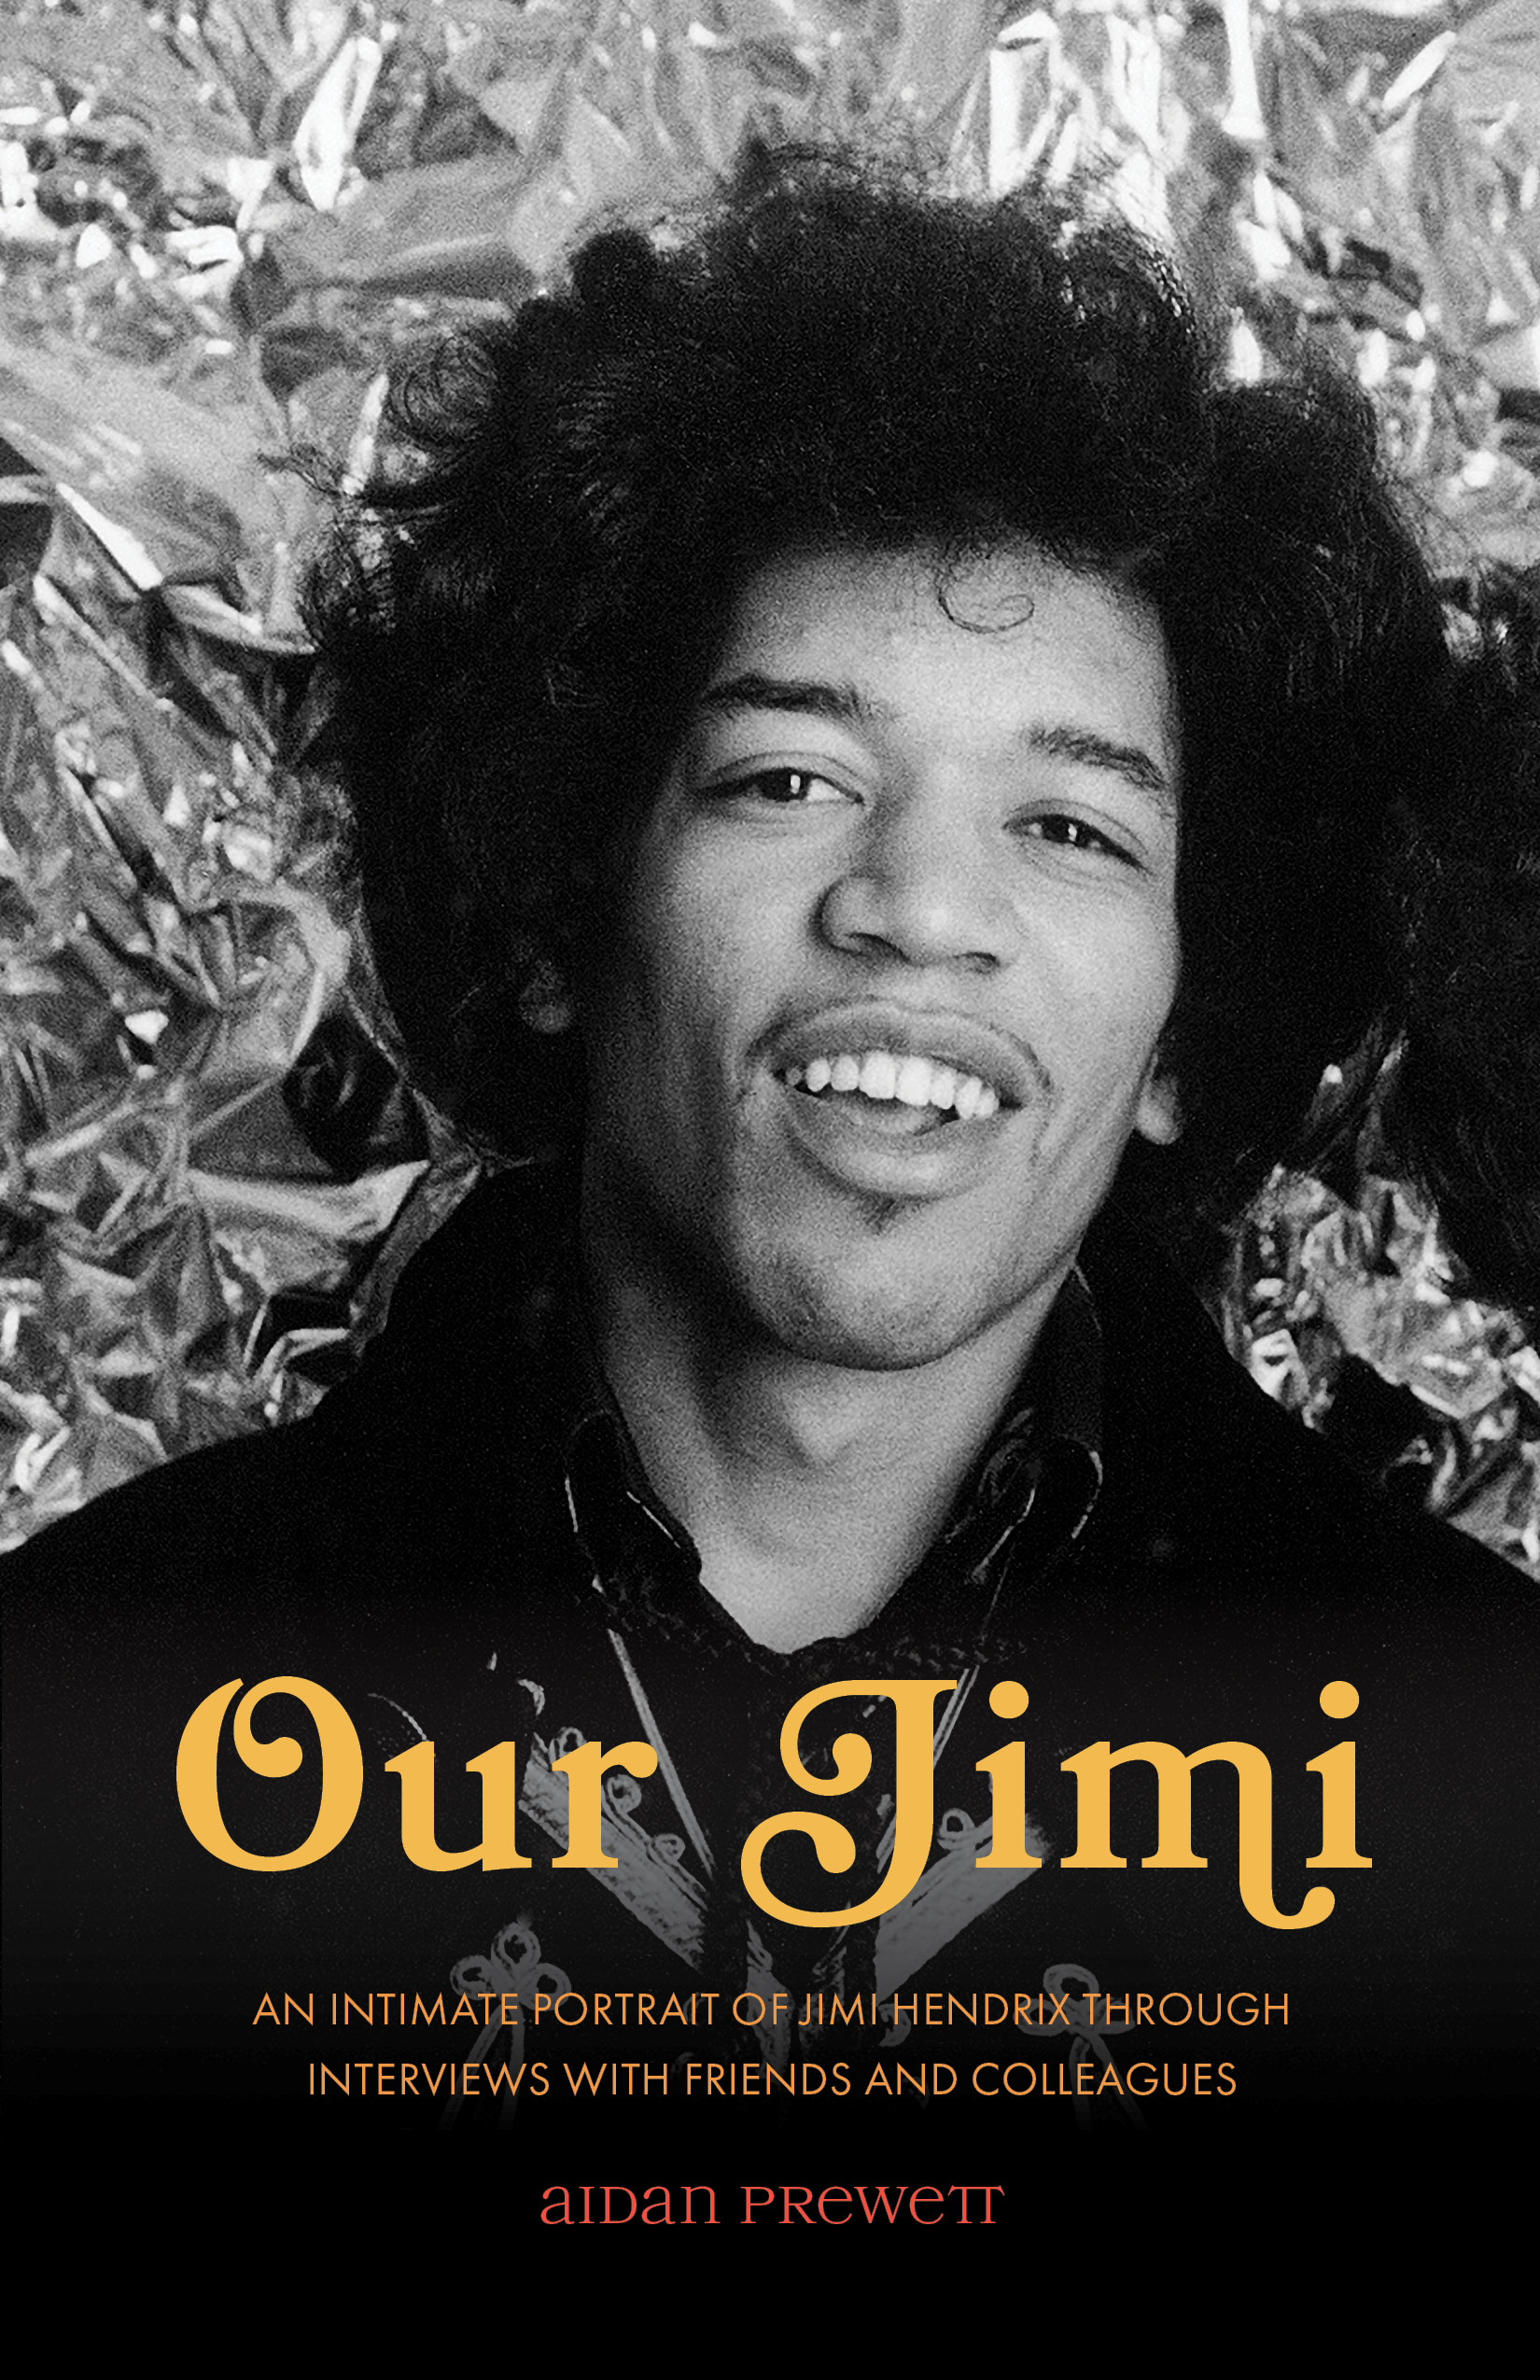 Personal Narrative: Jimi Hendrix